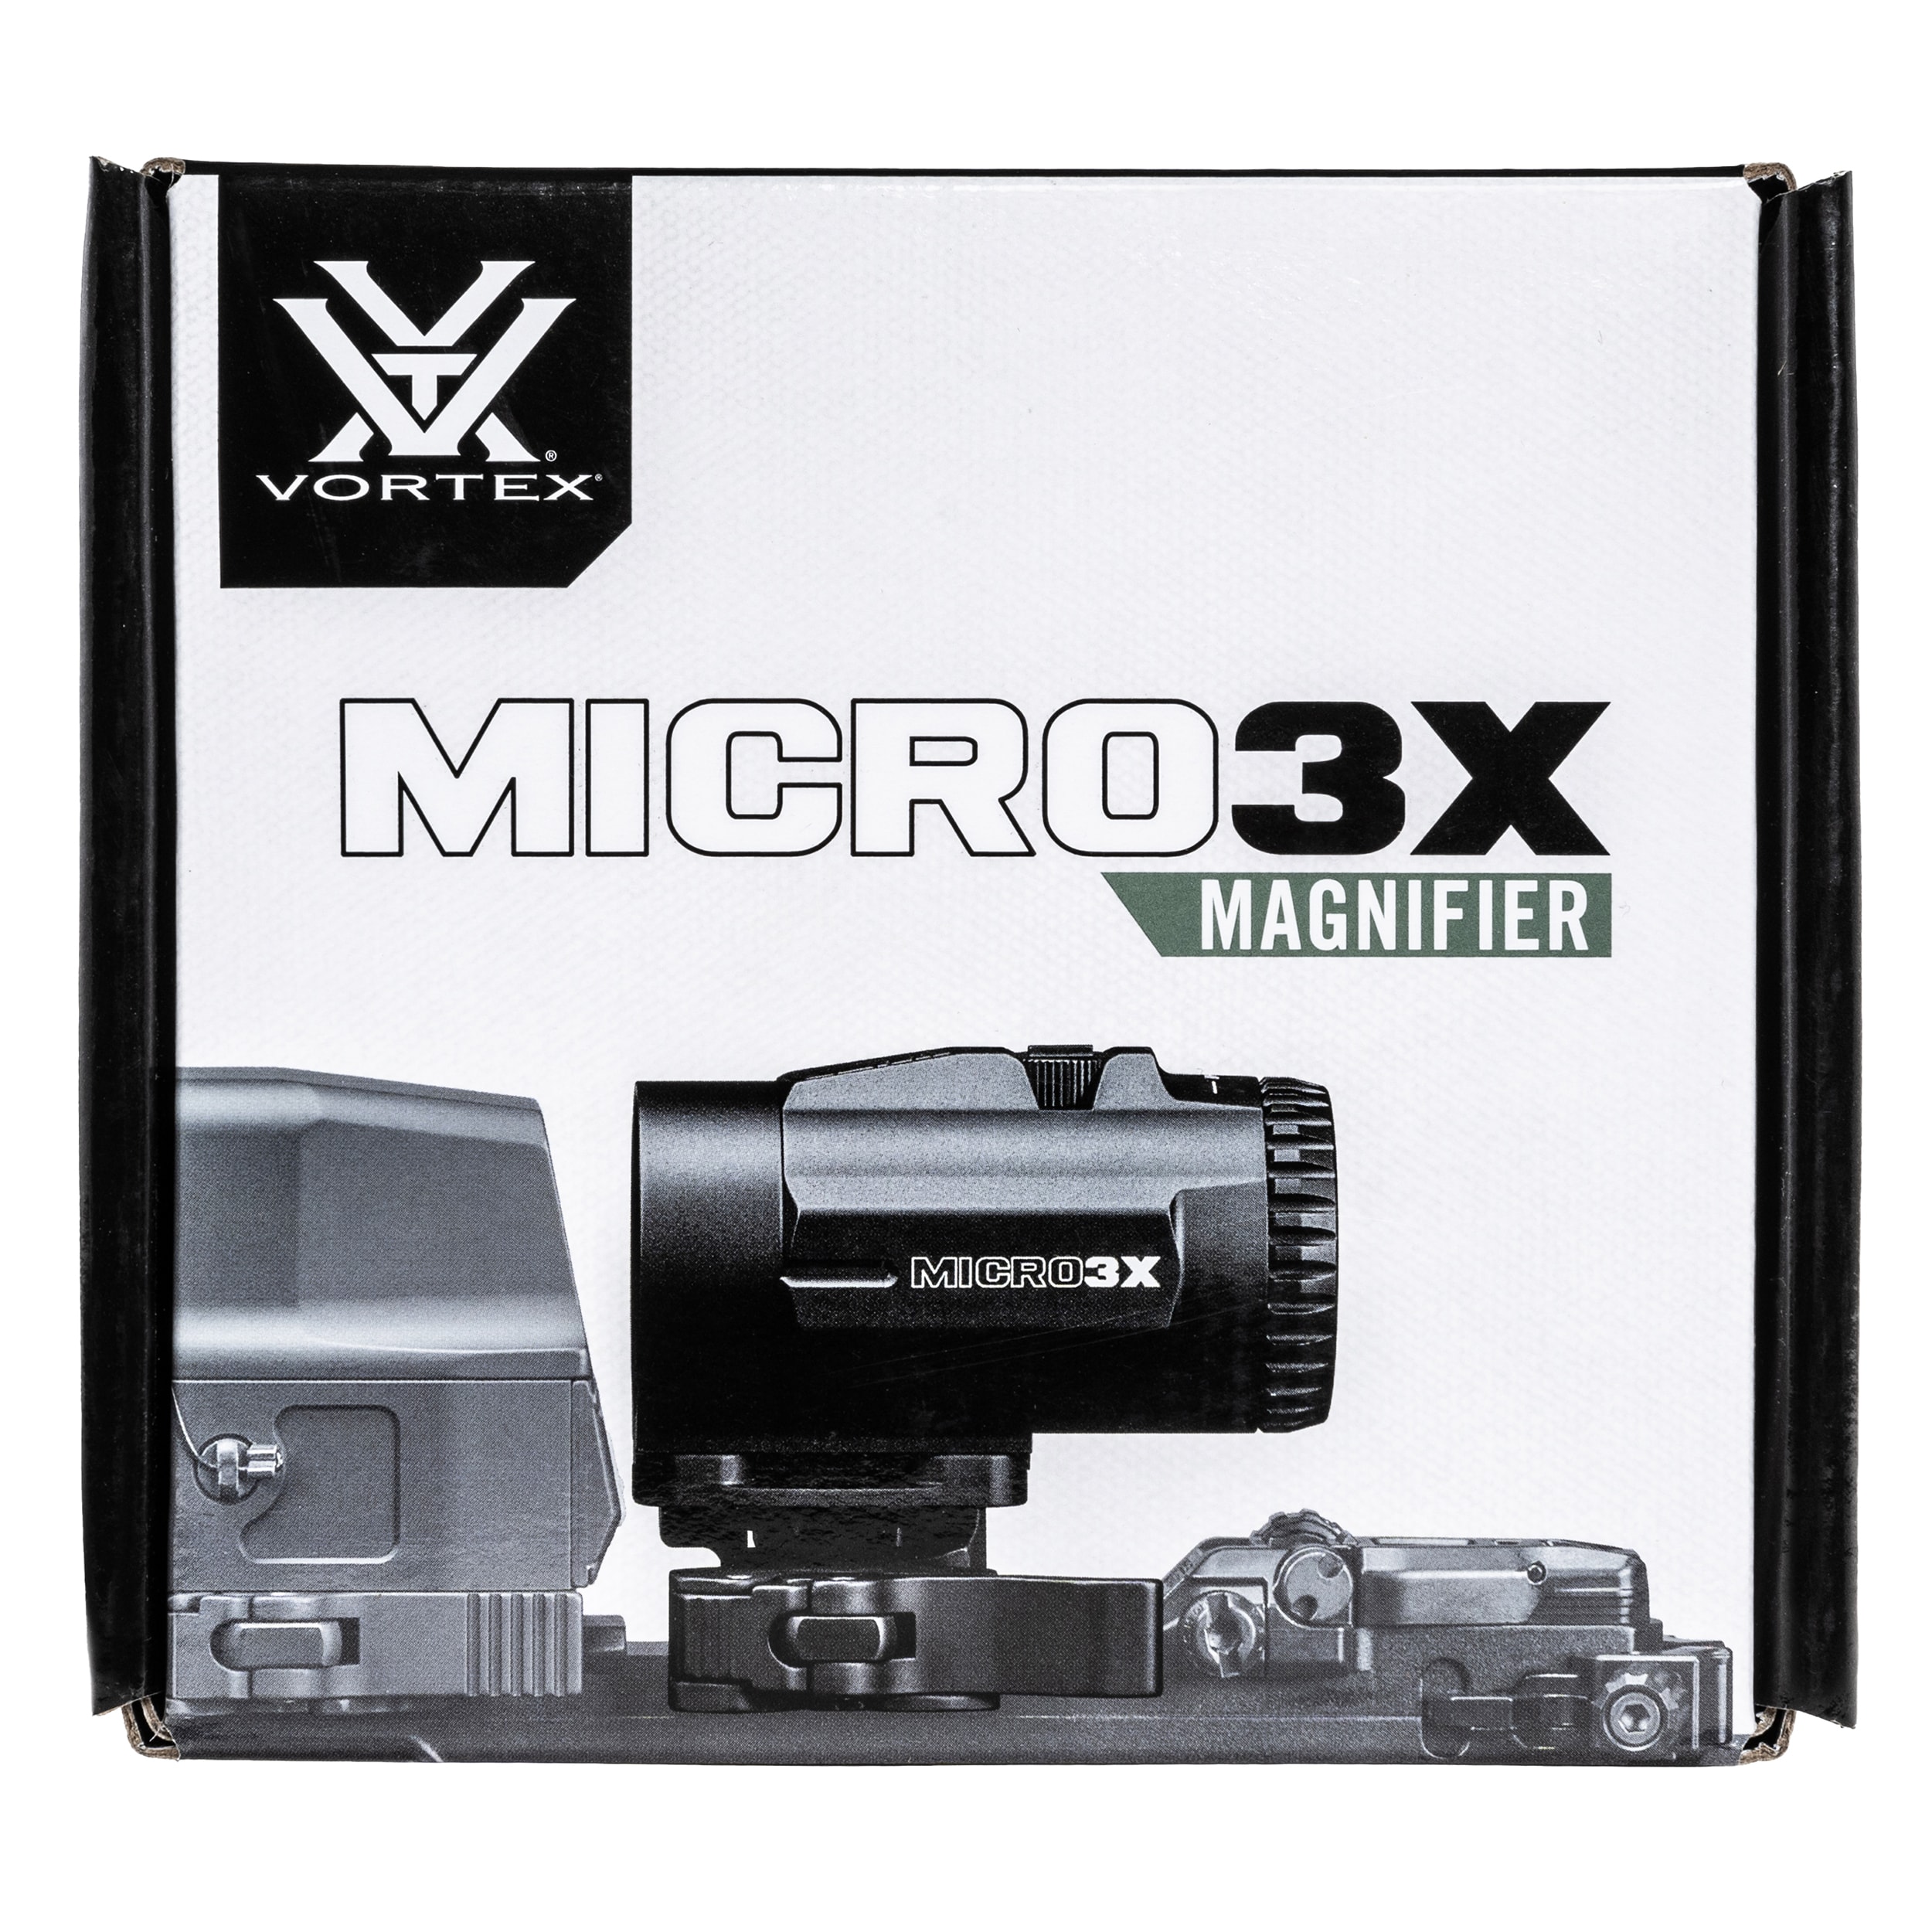 Luneta typu magnifier Vortex Micro 3x do kolimatora